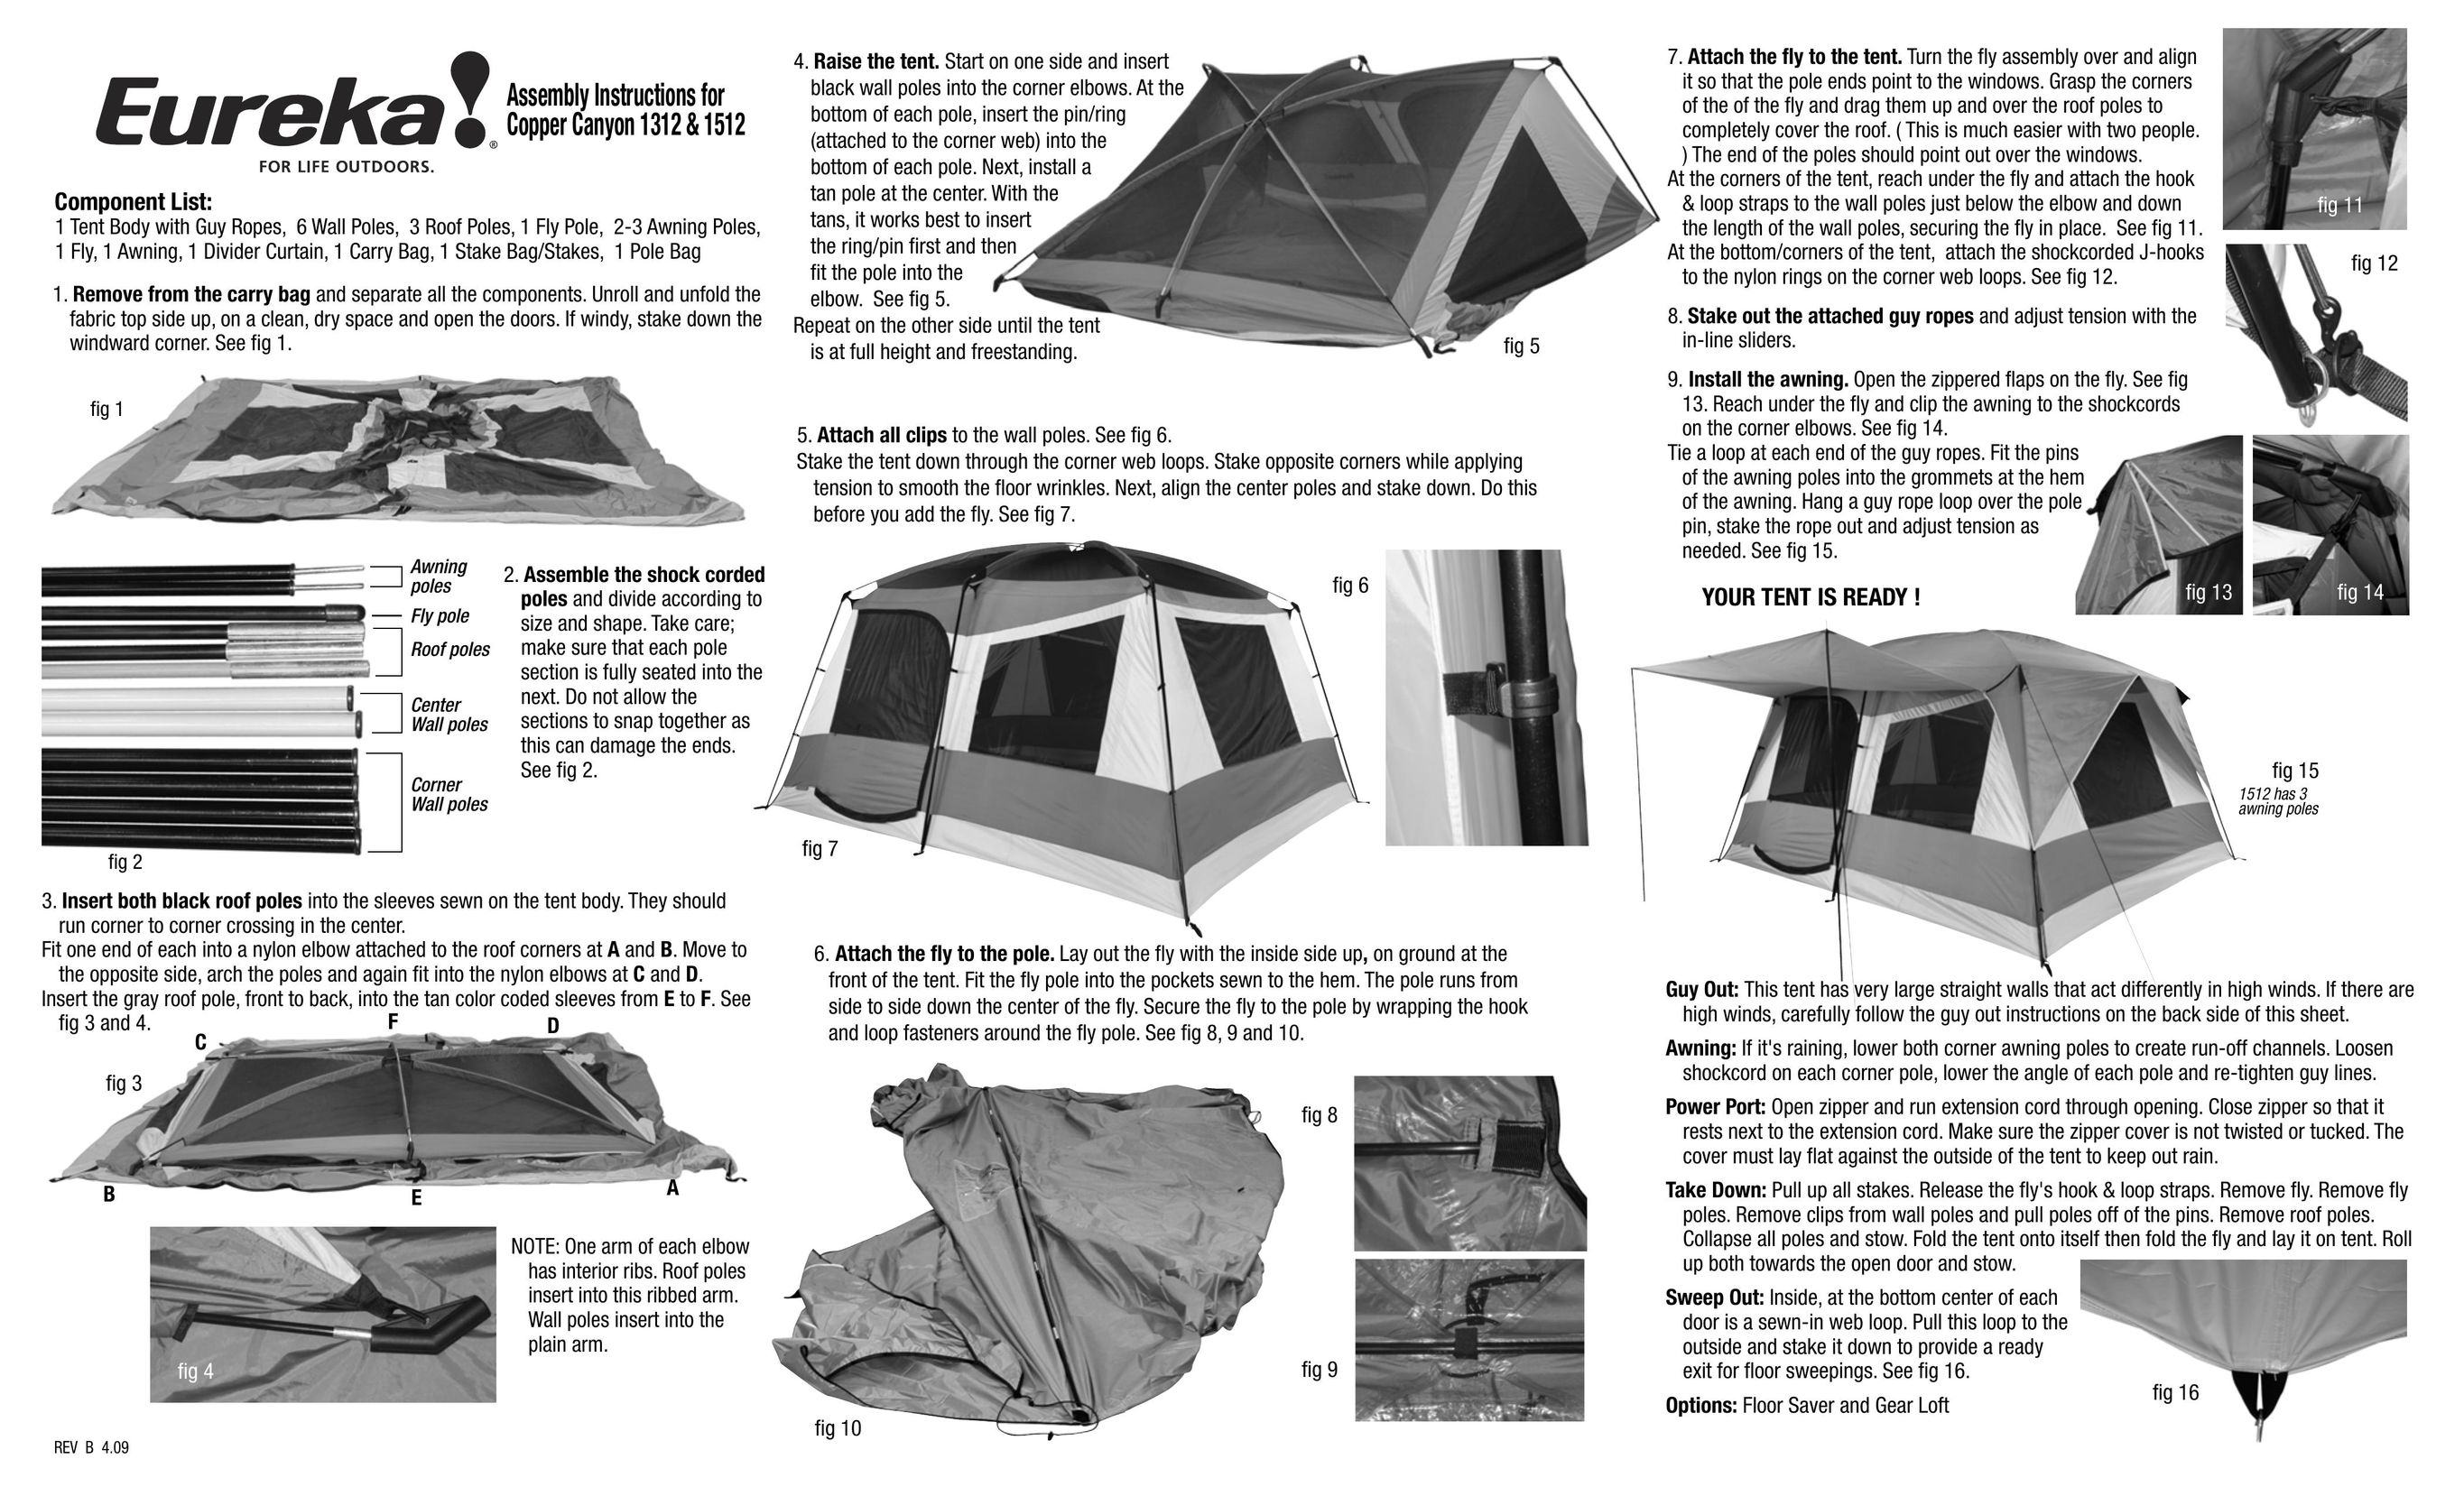 Eureka! Tents 1312 Tent User Manual